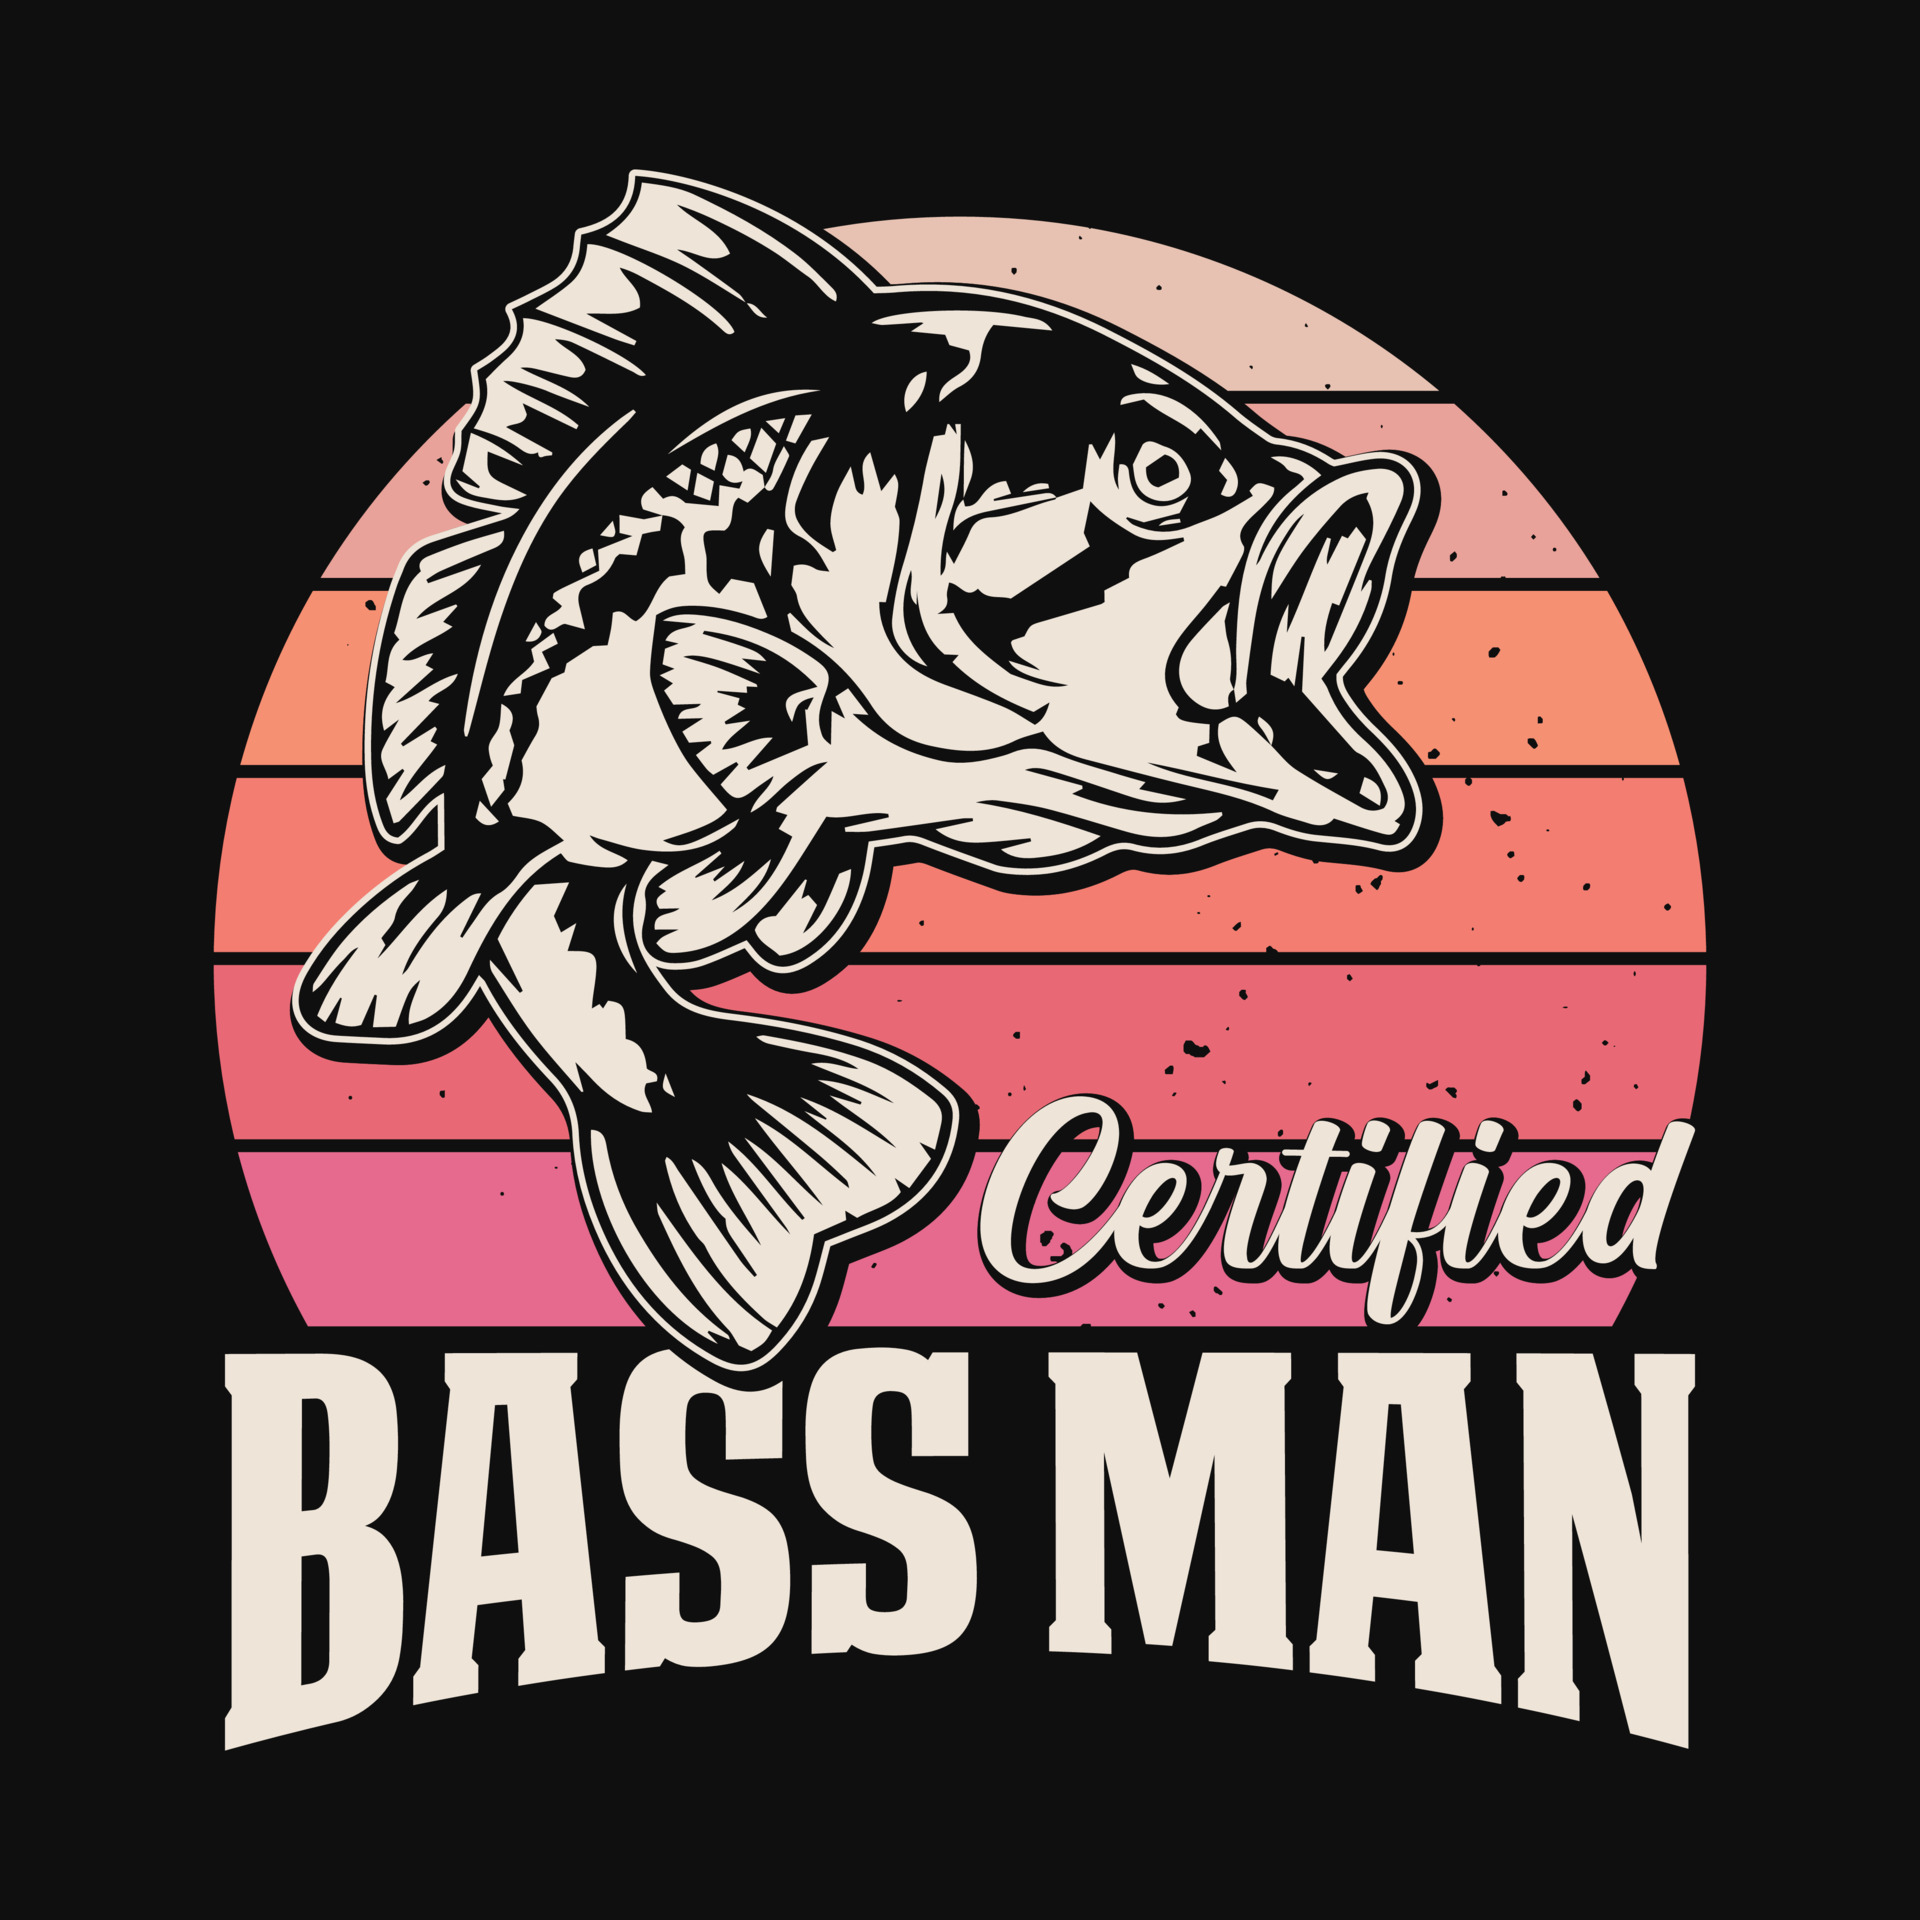 Certified bass man - Fishing quotes vector design, t shirt design